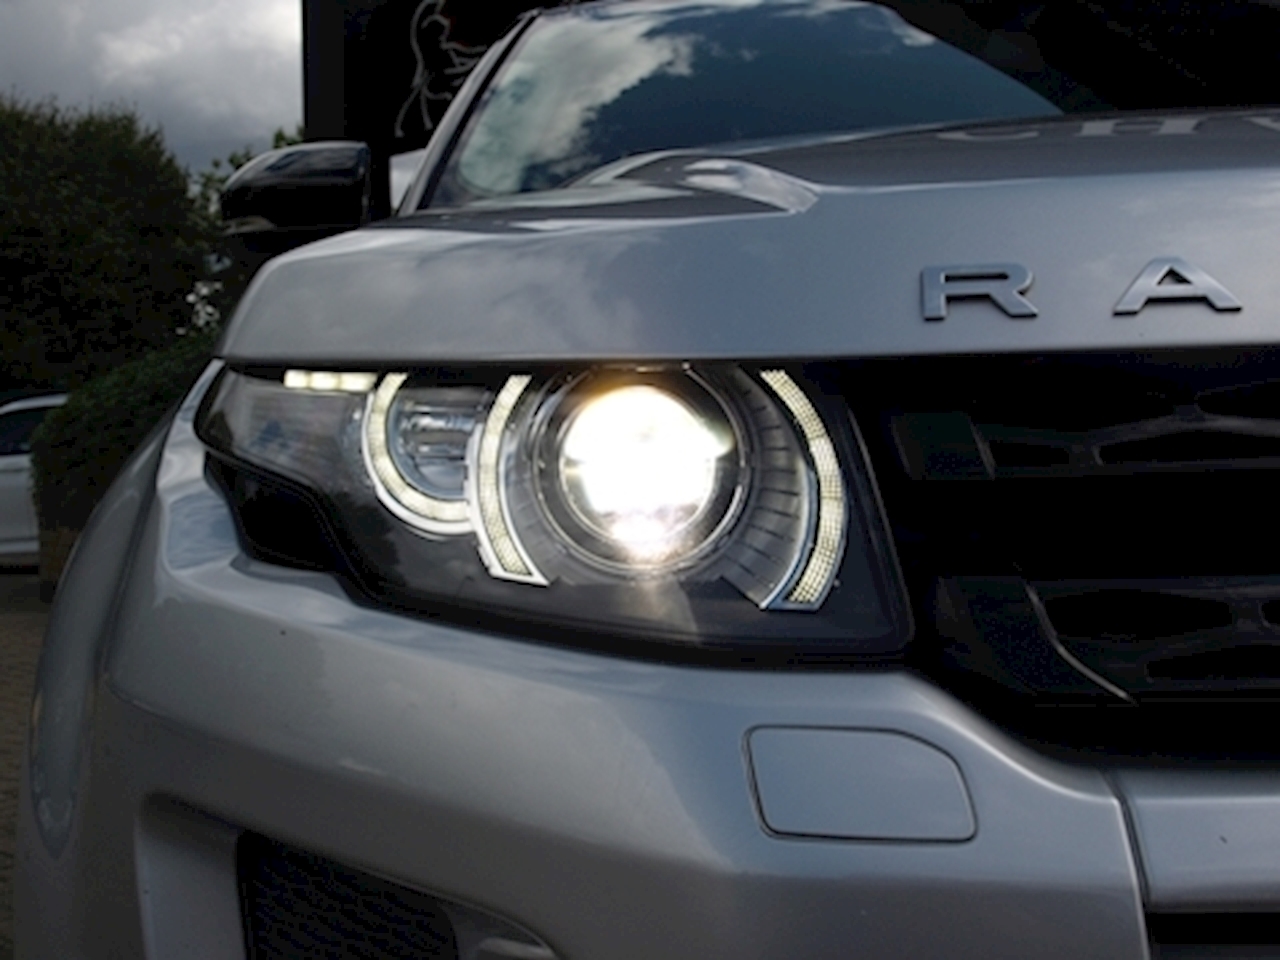 Range Rover Evoque Sd4 Dynamic Lux Estate 2.2 Automatic Diesel